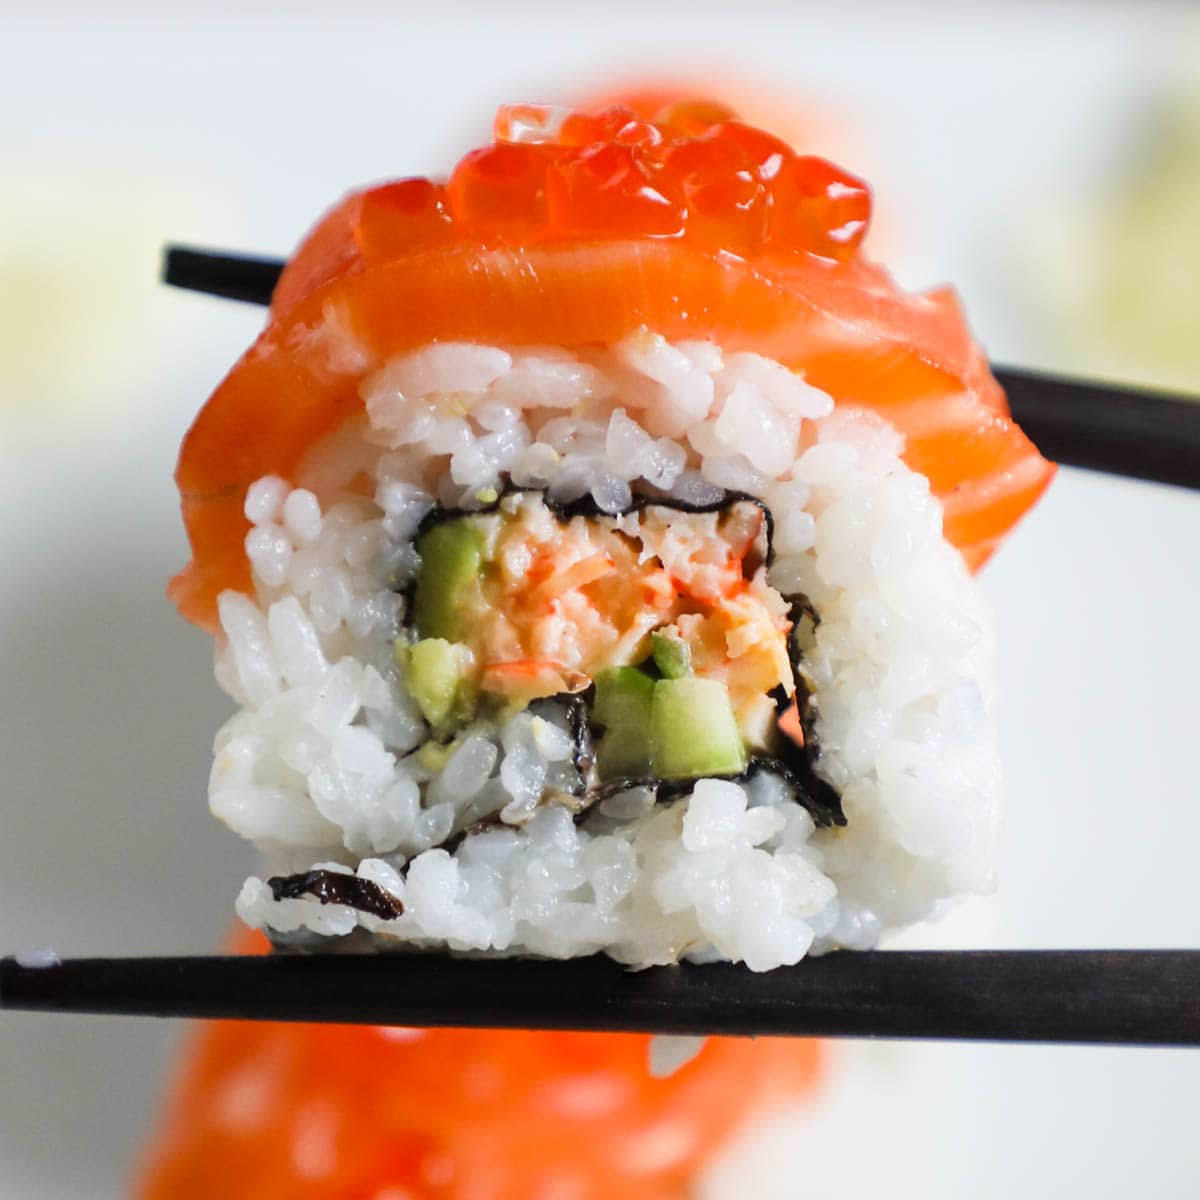 Alaska Sushi Roll • The Heirloom Pantry